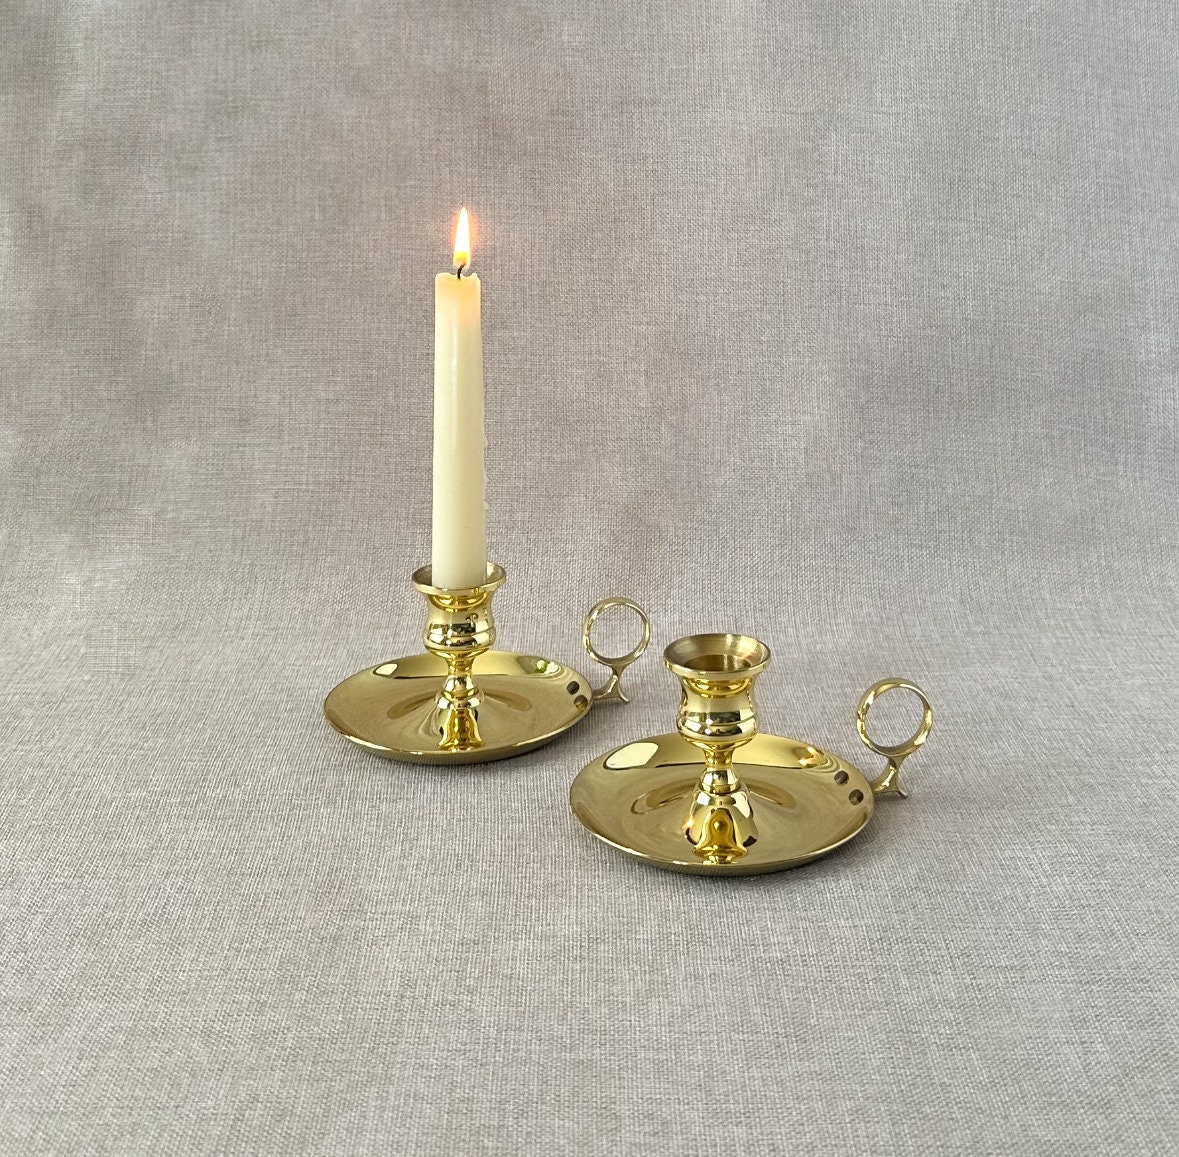 Vintage Pair Brass Chamberstick Candlesticks by BALDWIN - Low Candleholder  w/ Finger Loop